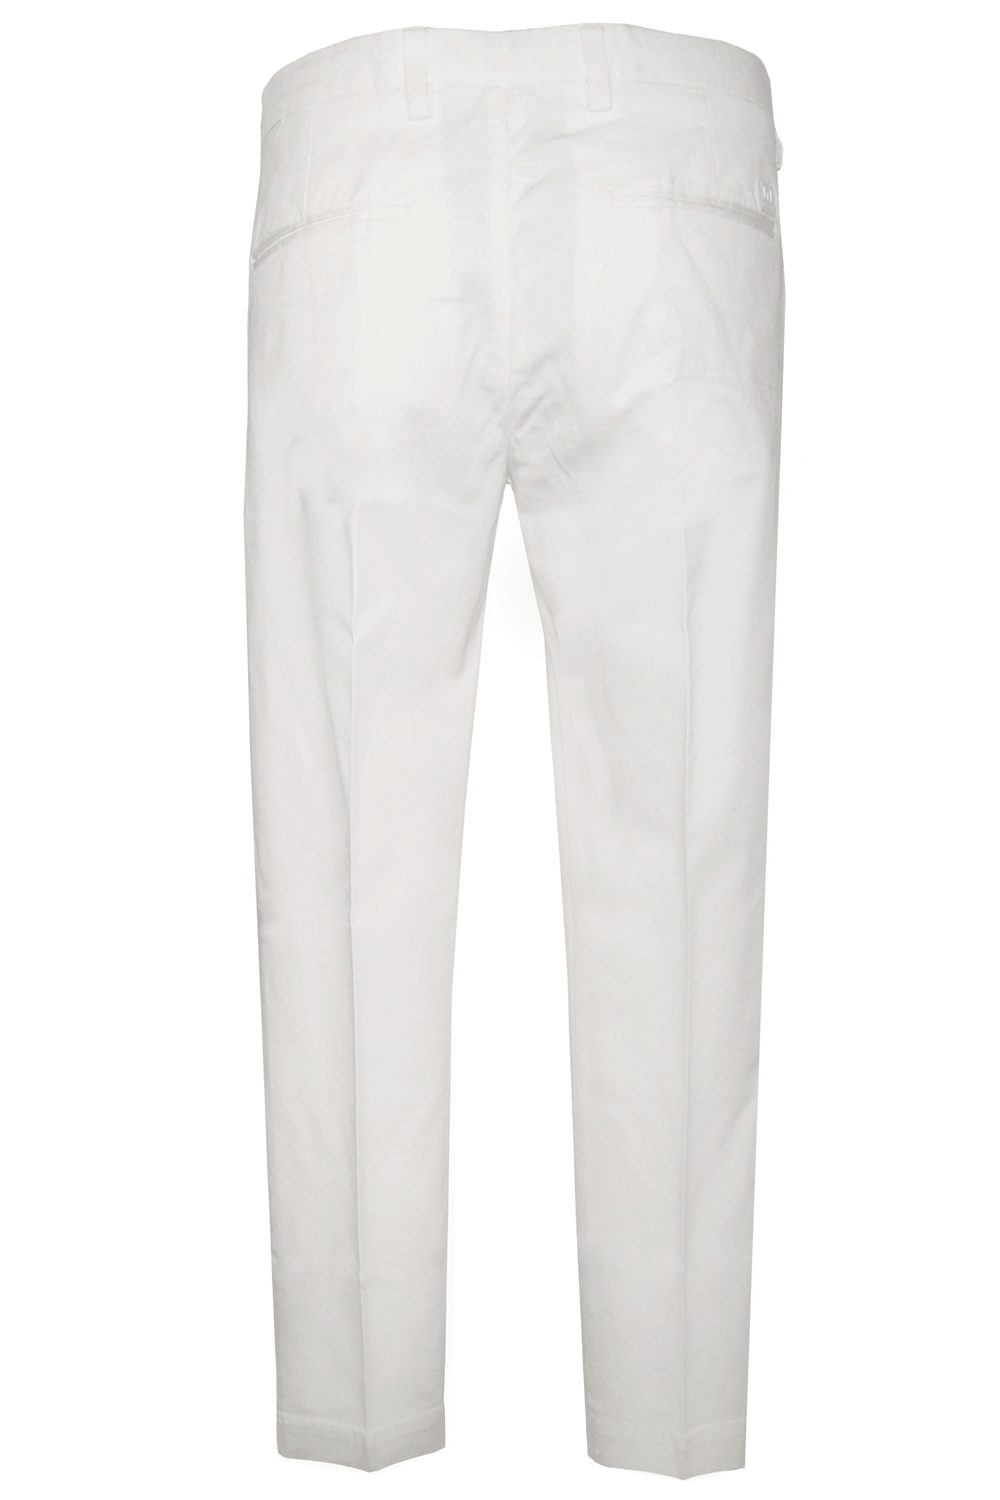 Pantalone bianco-ENTRE AMIS Pantaloni ENTRE AMIS   